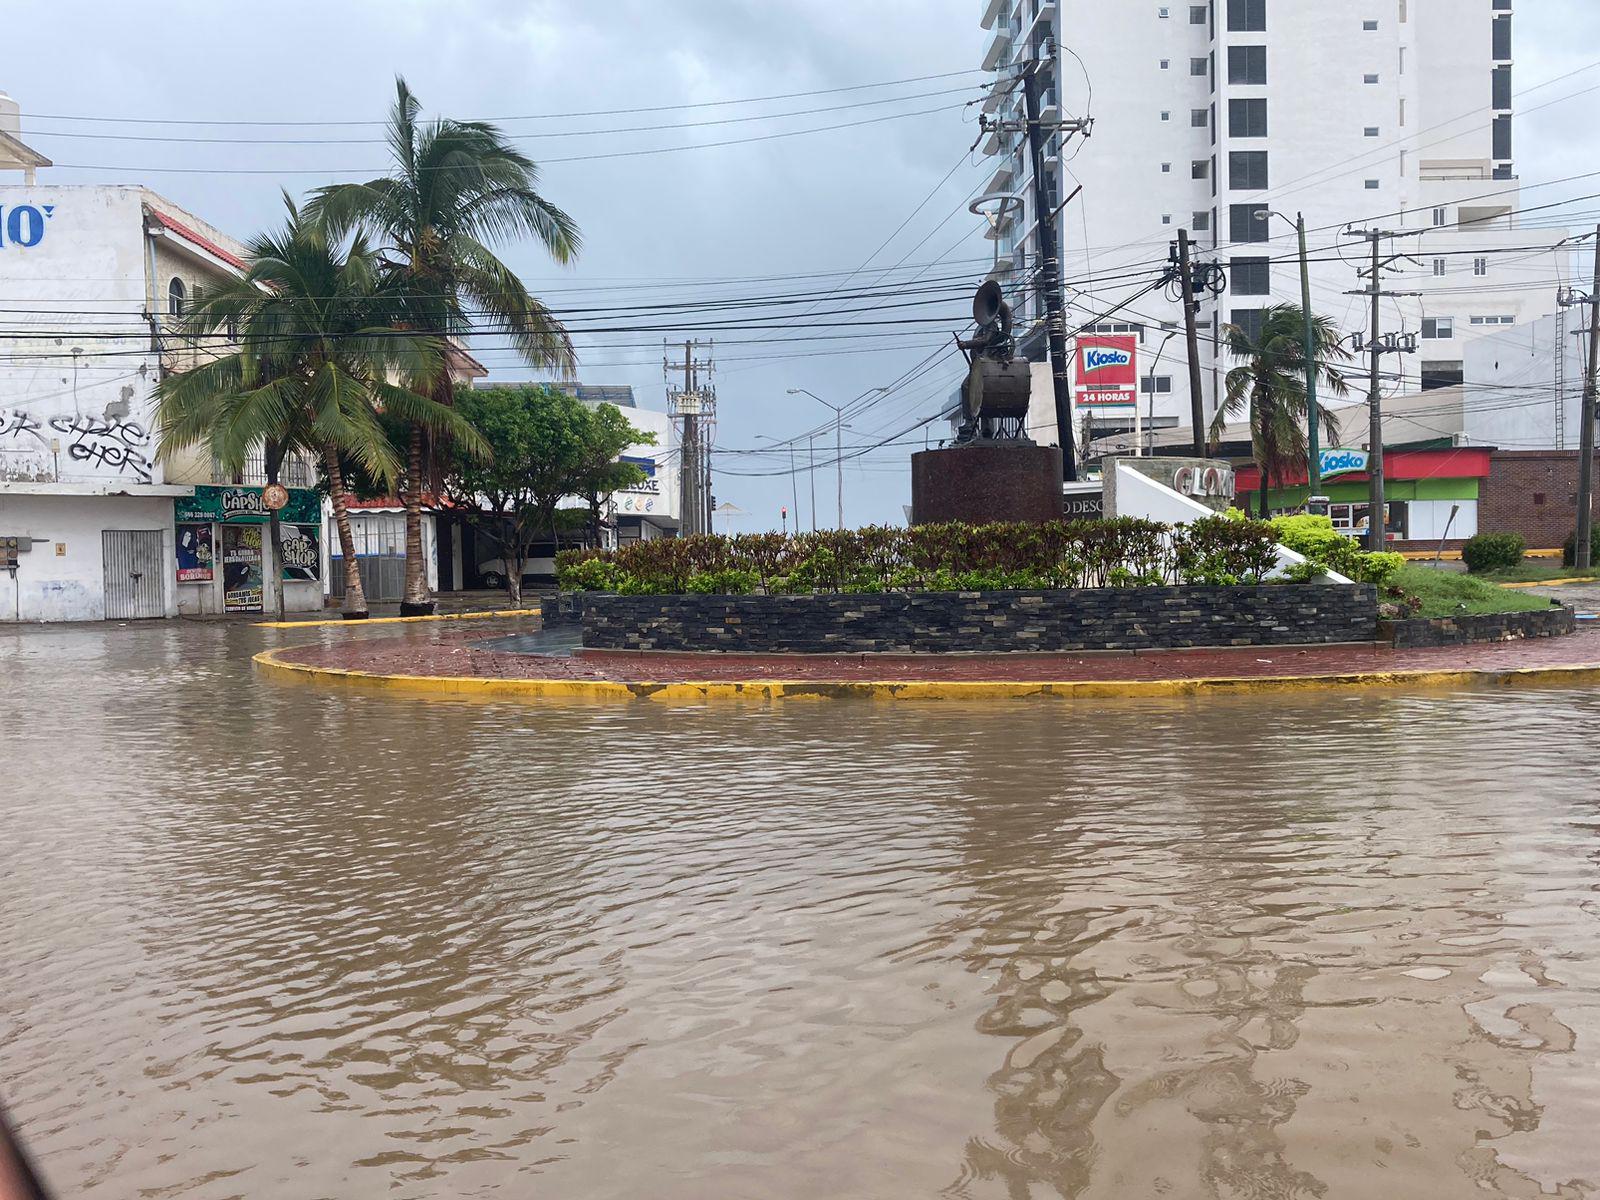 $!Lluvias de este lunes provocan avenidas inundadas en diversas zonas de Mazatlán